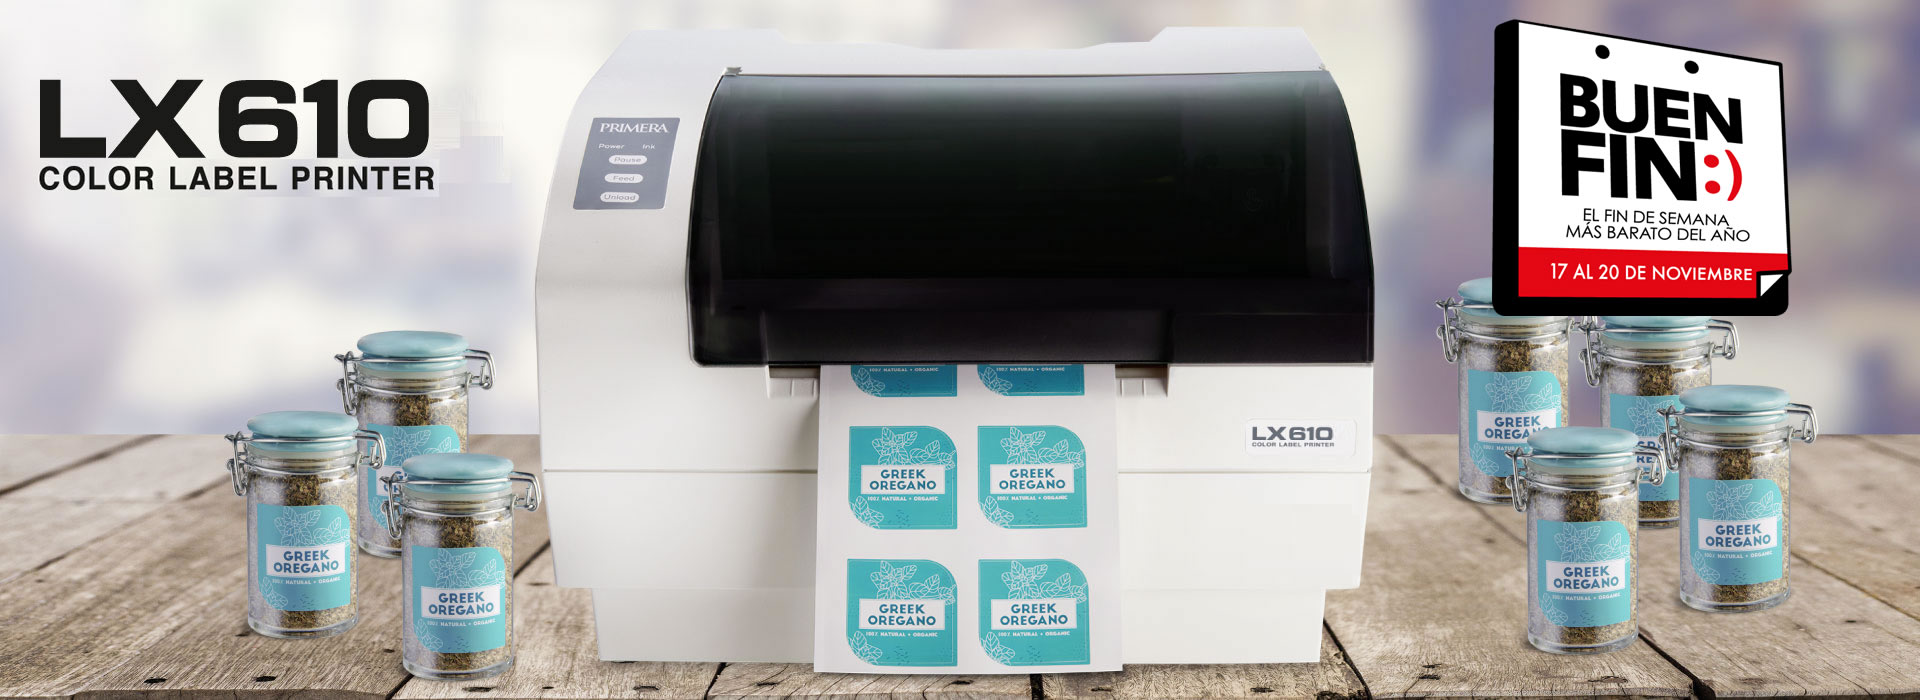 Impresora de etiquetas a color LX610 con plotter / cortador